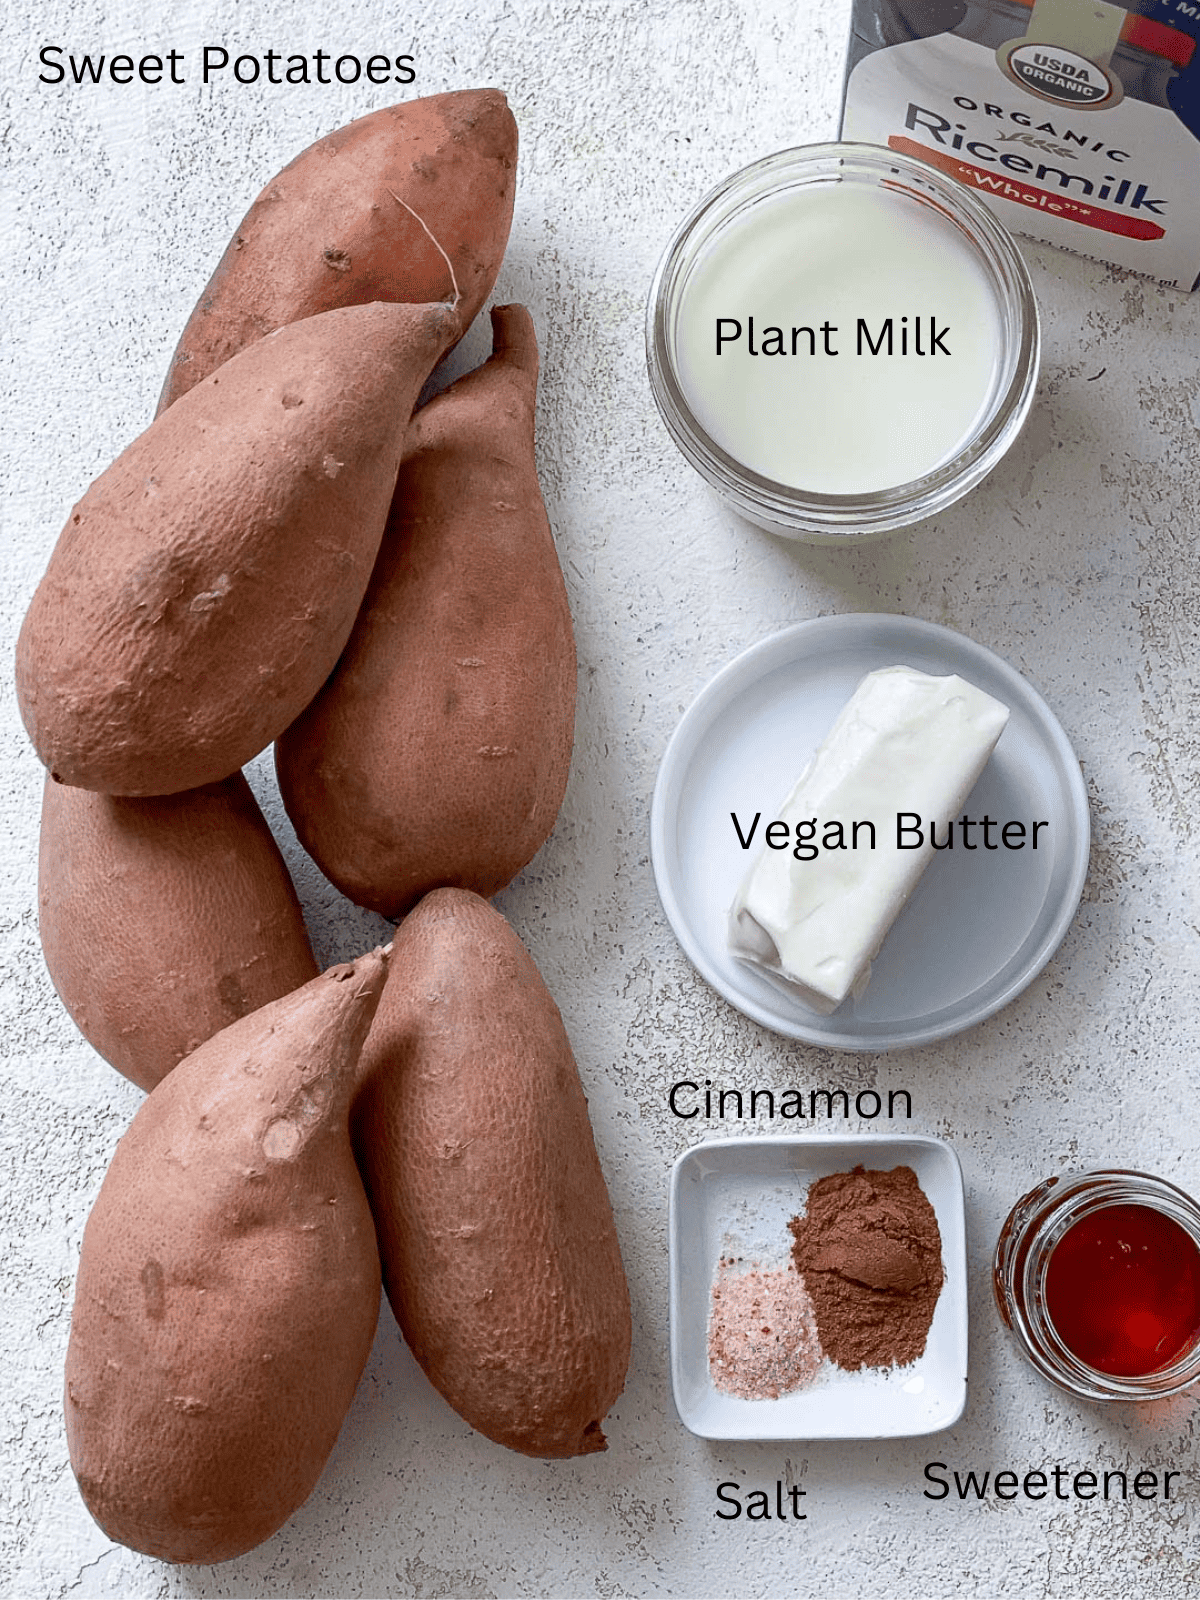 Ingredients for making mashed sweet potatoes.